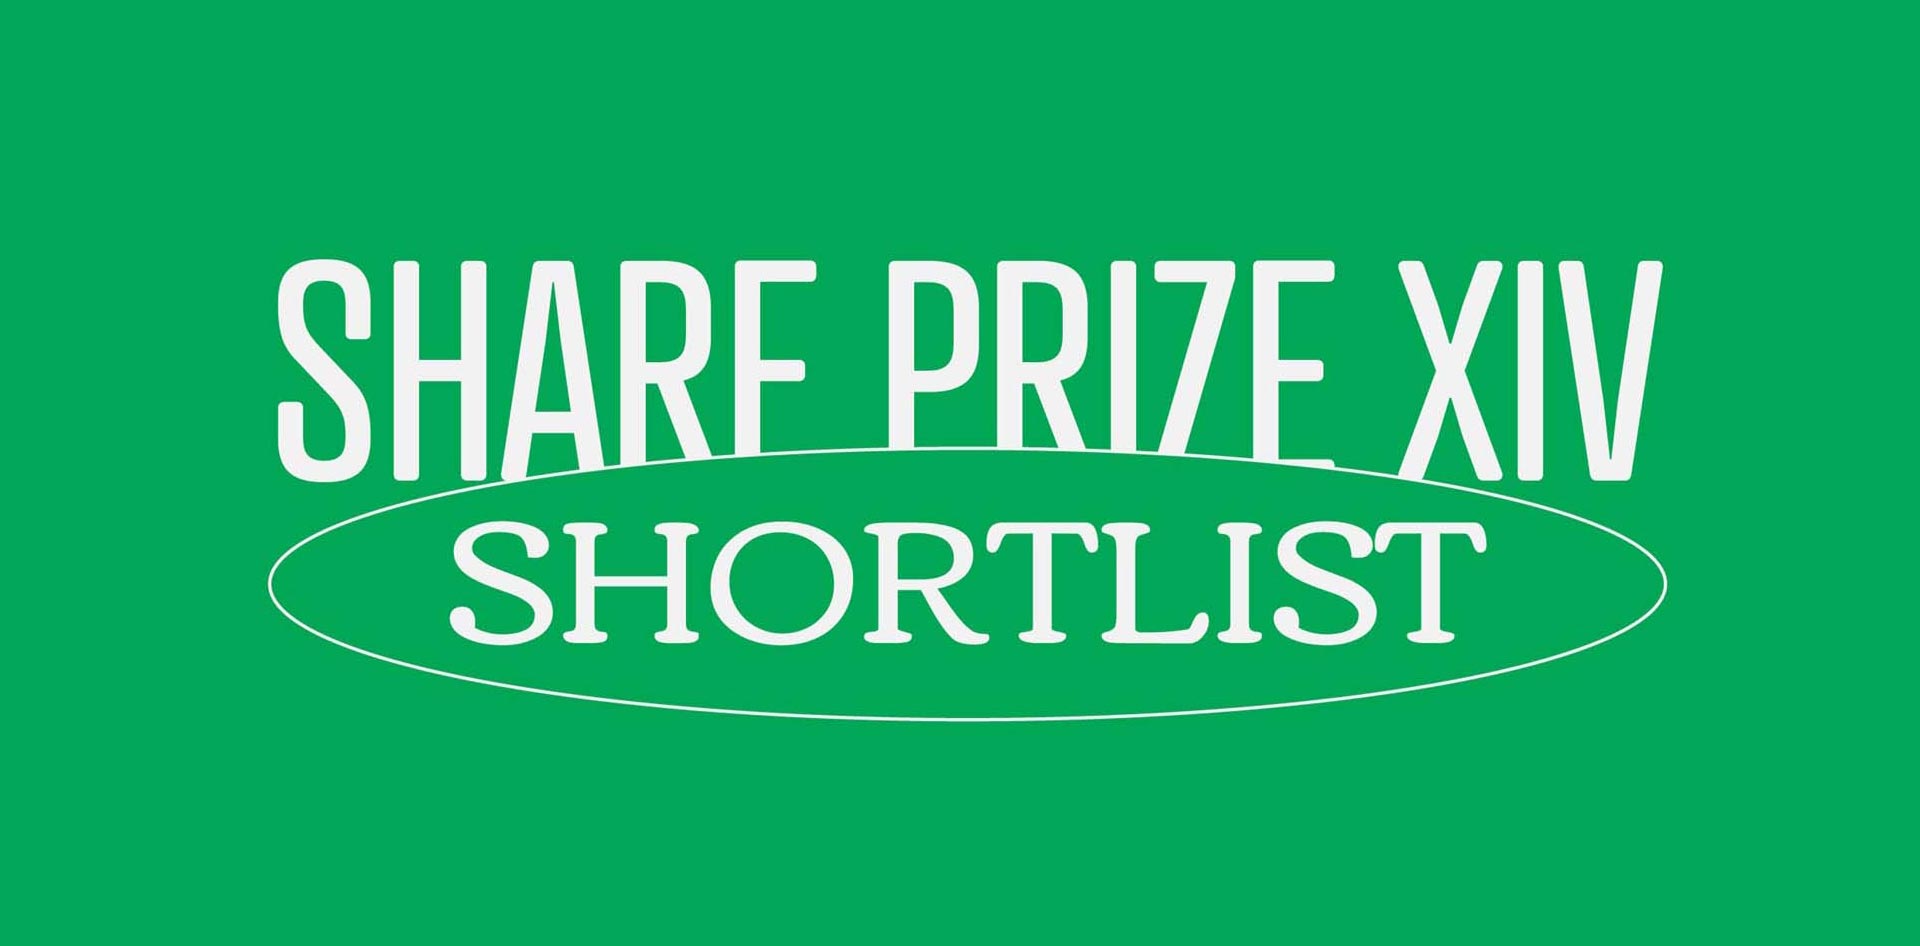 Share Prize XIV Shortlist